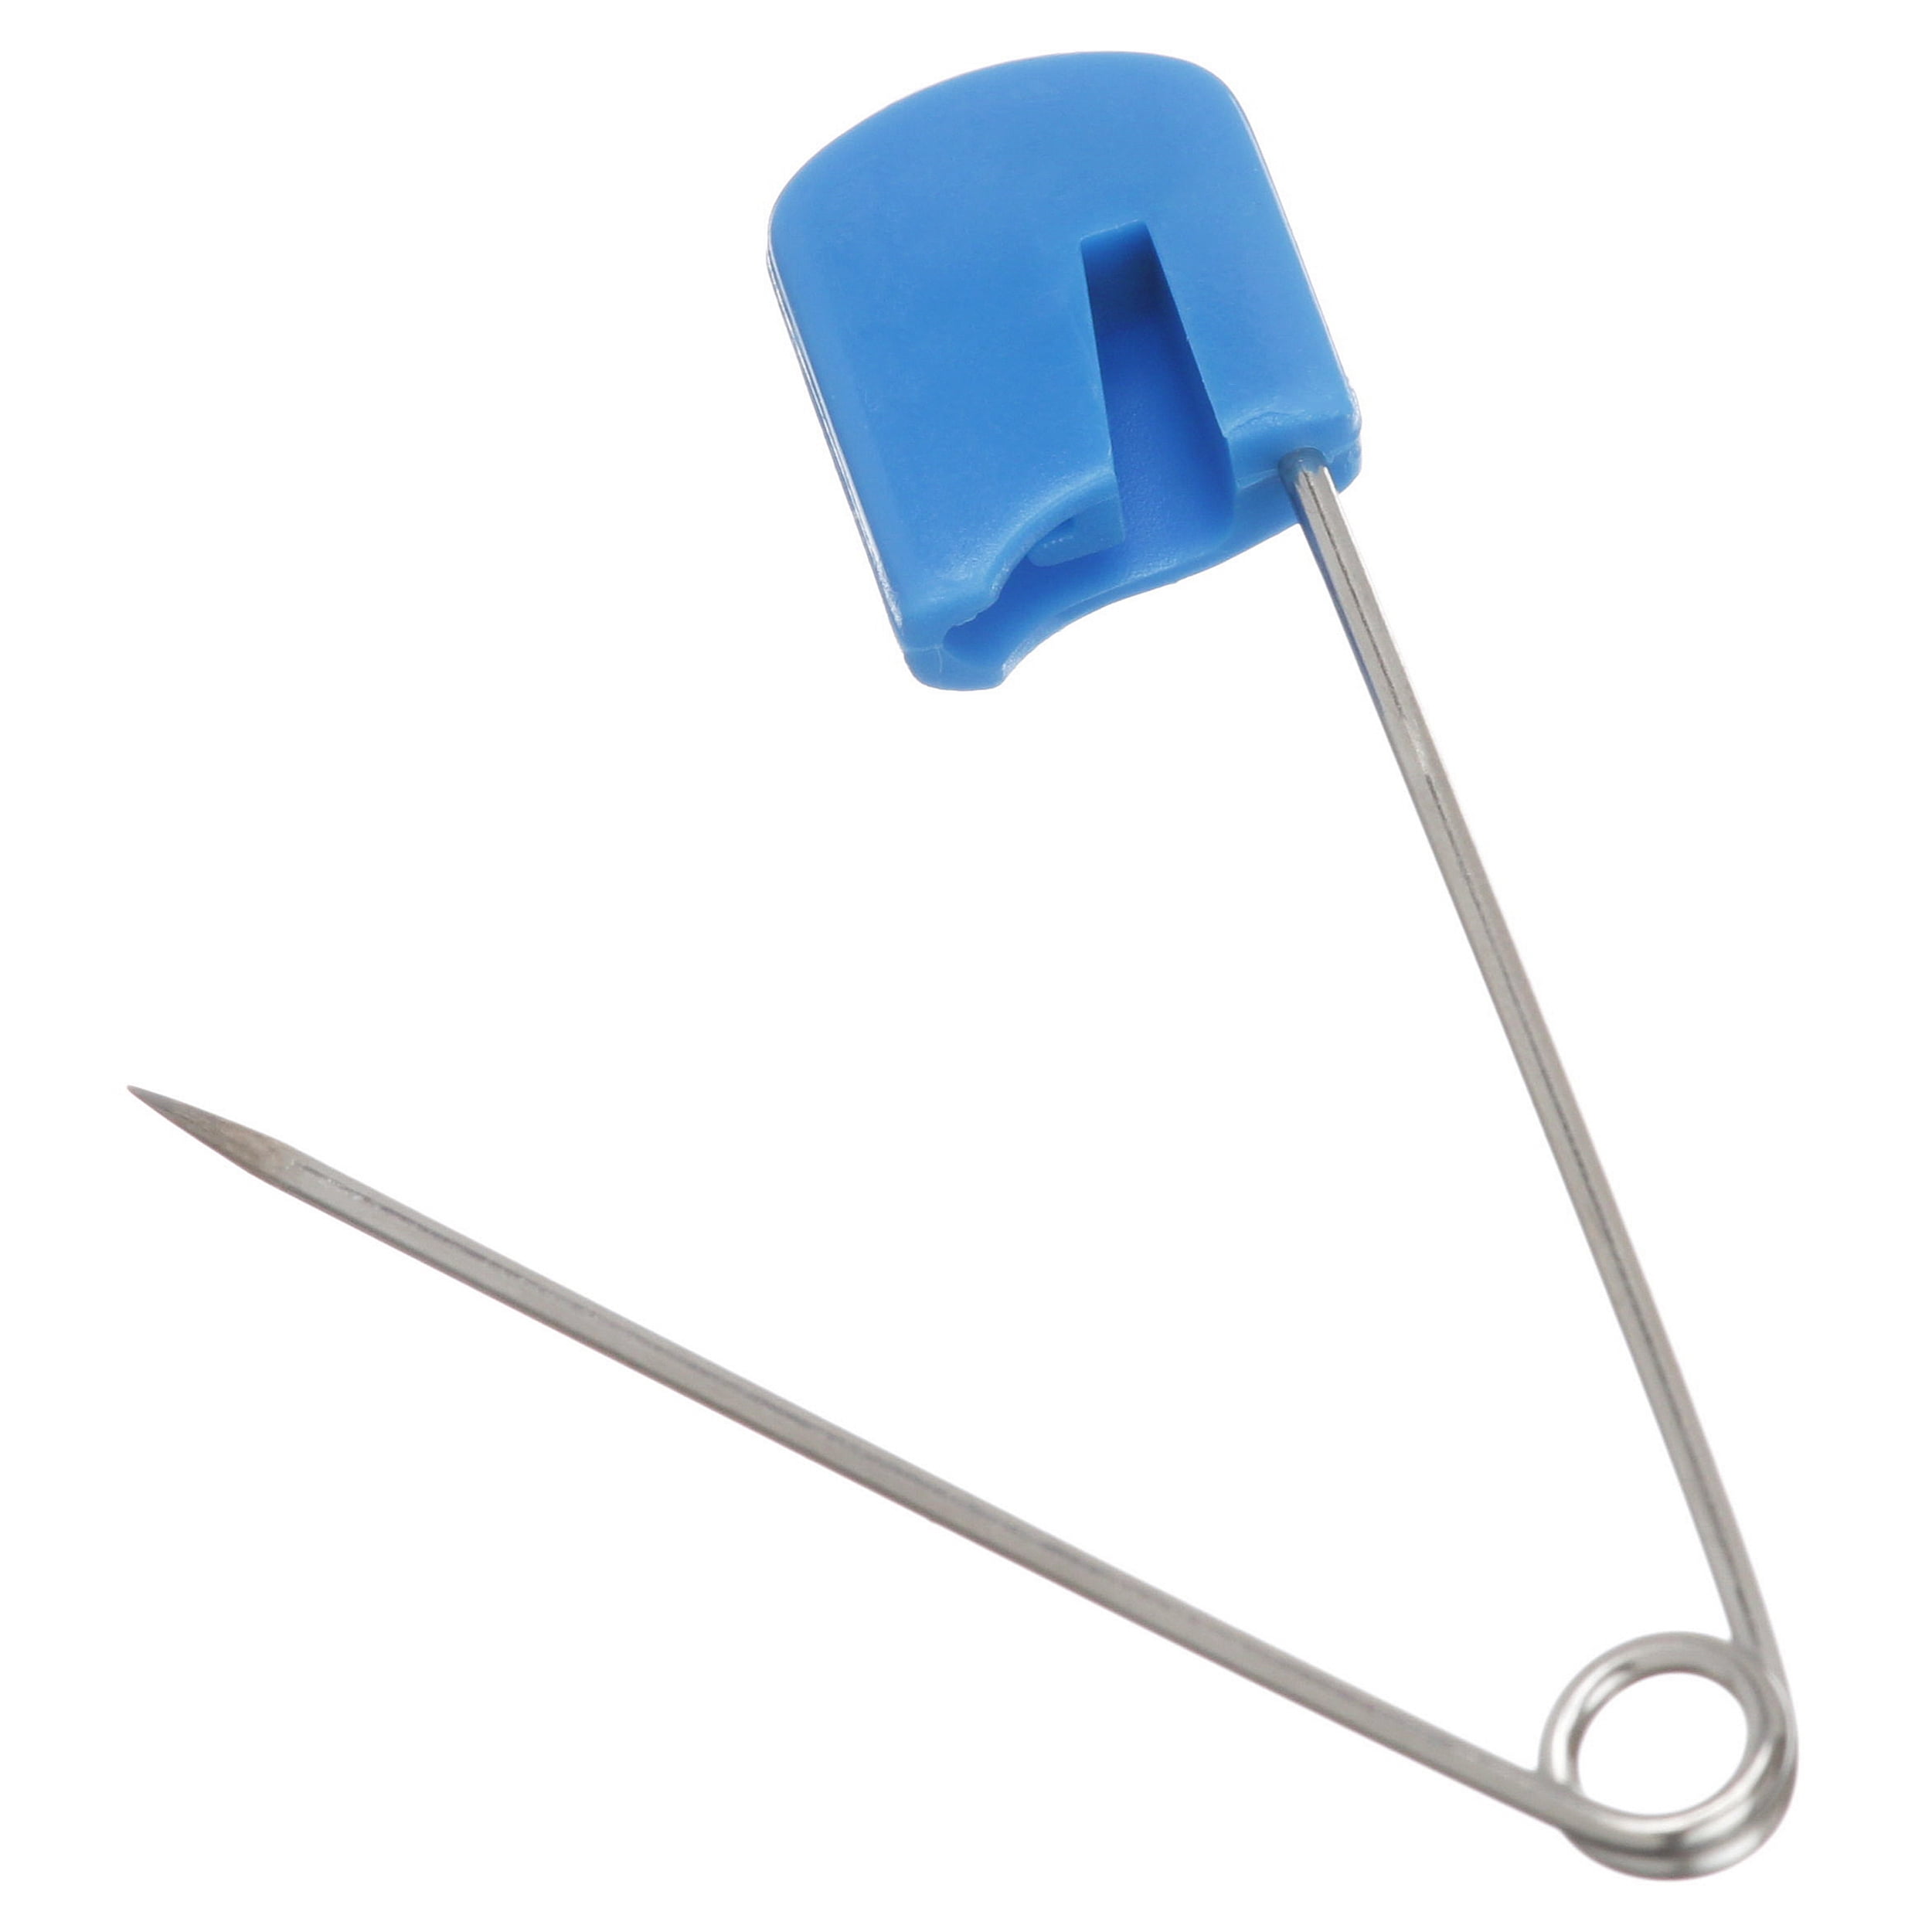 Diaper Pin 1.5 - Baby Blue - 144 Pc. Pkg.